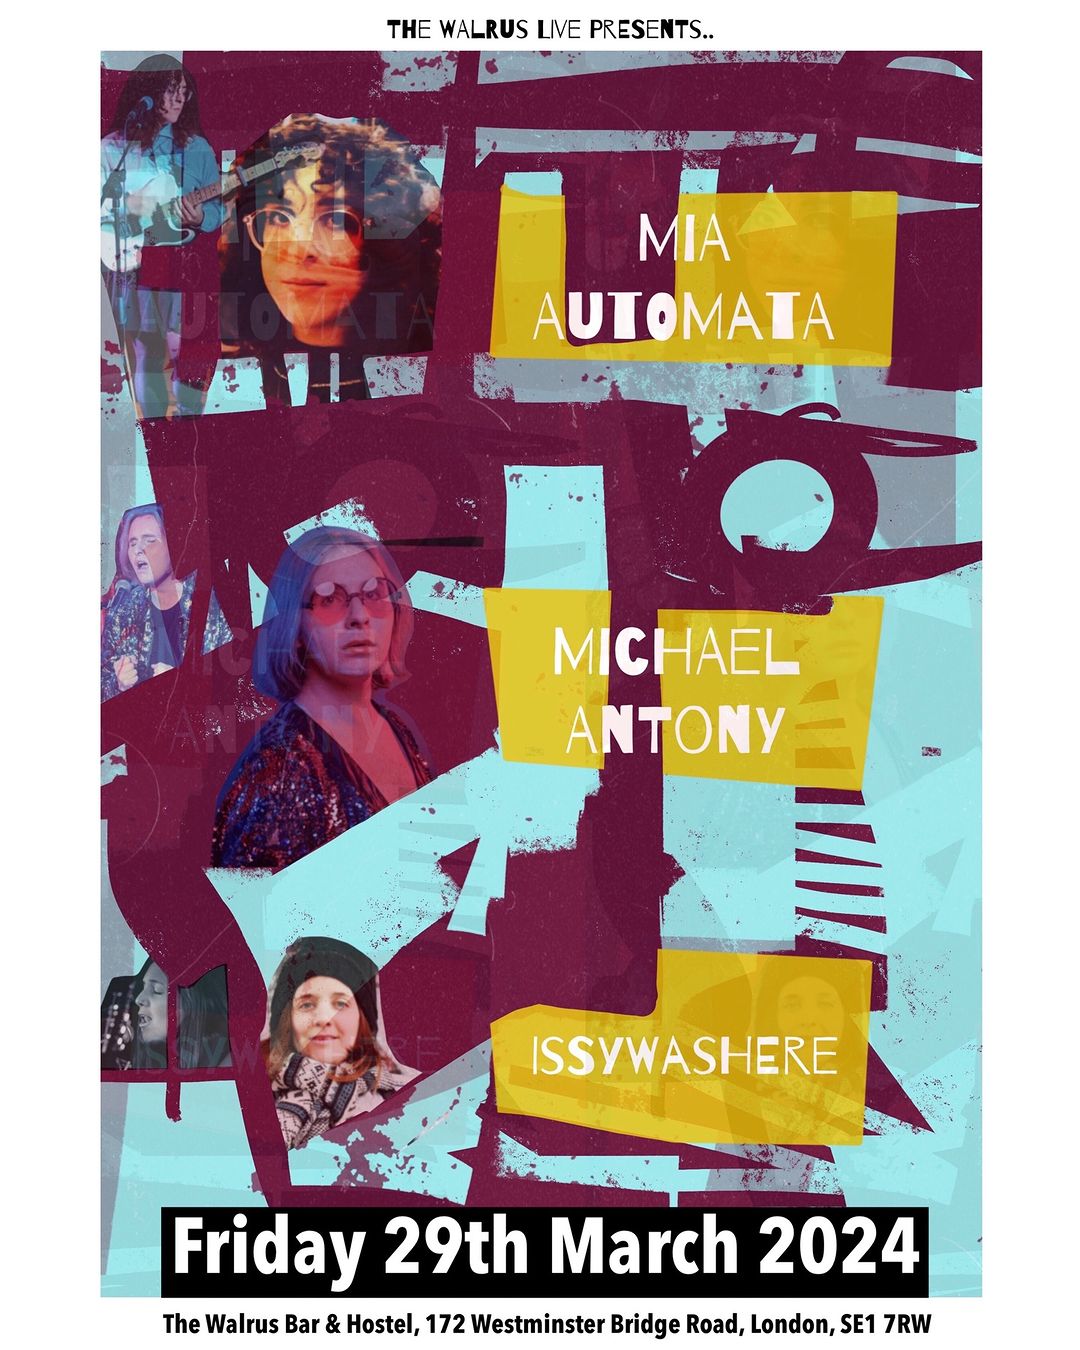 Mia Automata | Musical Artist | The Walrus Bar and Hostel | Michael Antony | Musical Artist | Issywashere | Musical Artist